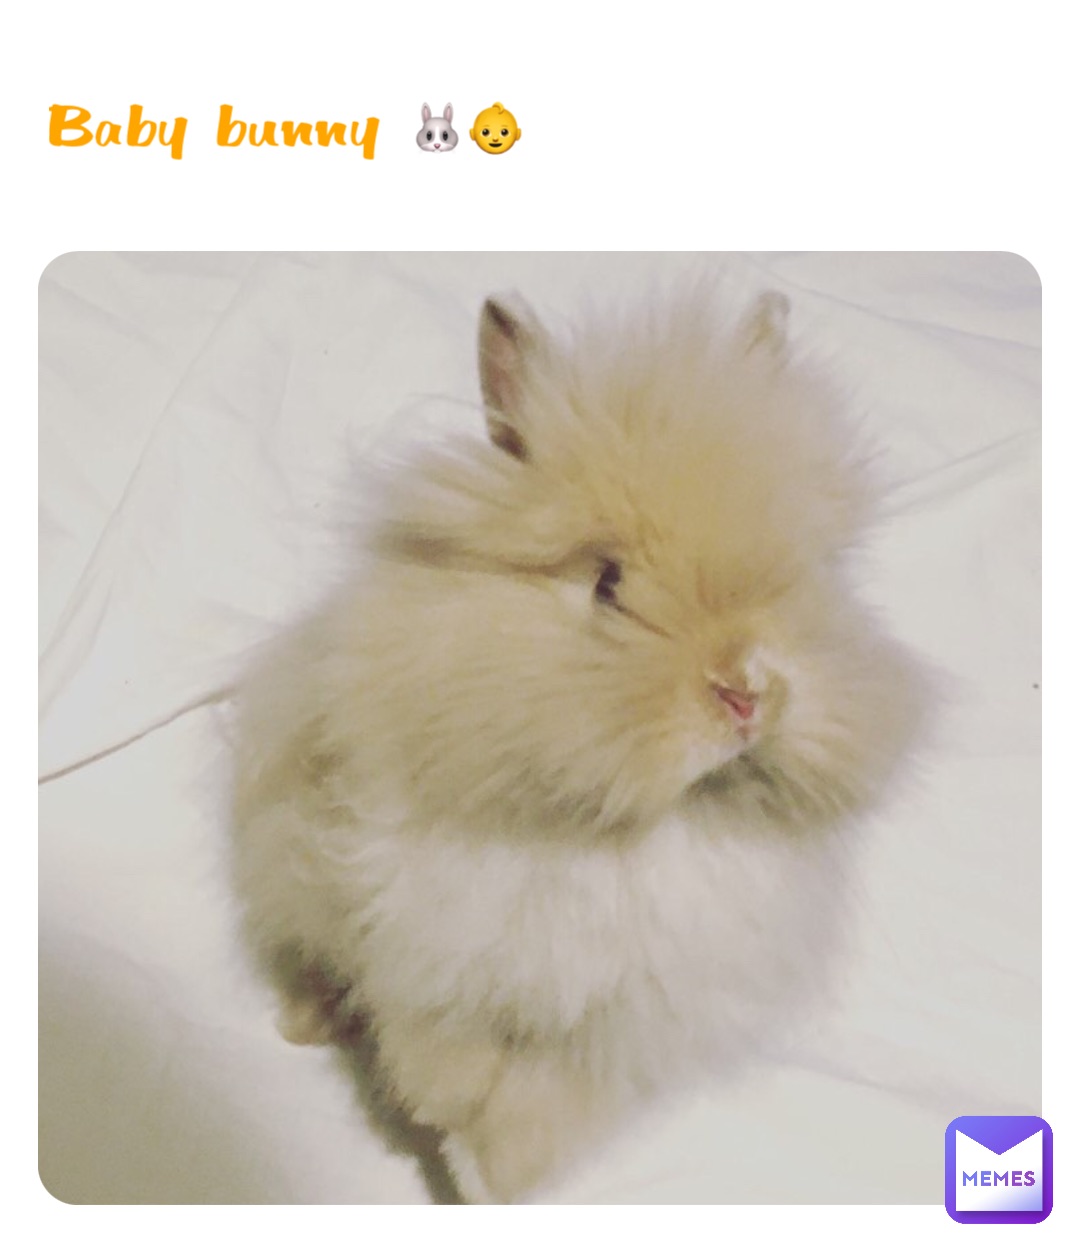 Baby bunny 🐰👶